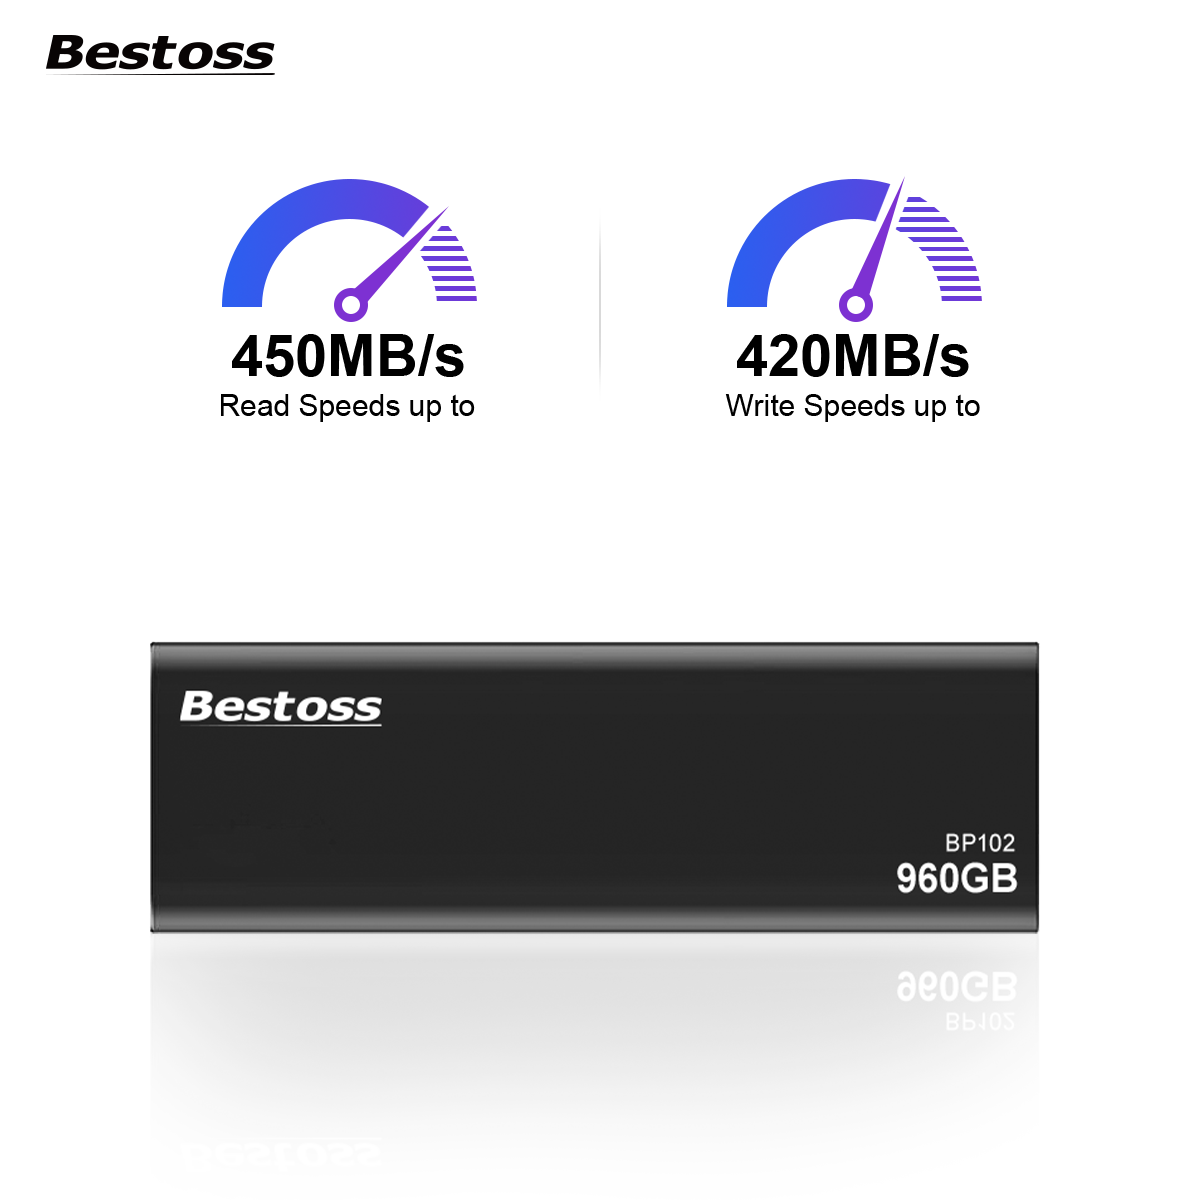 BP102 512GB USB 3.1 Gen2 External SSD